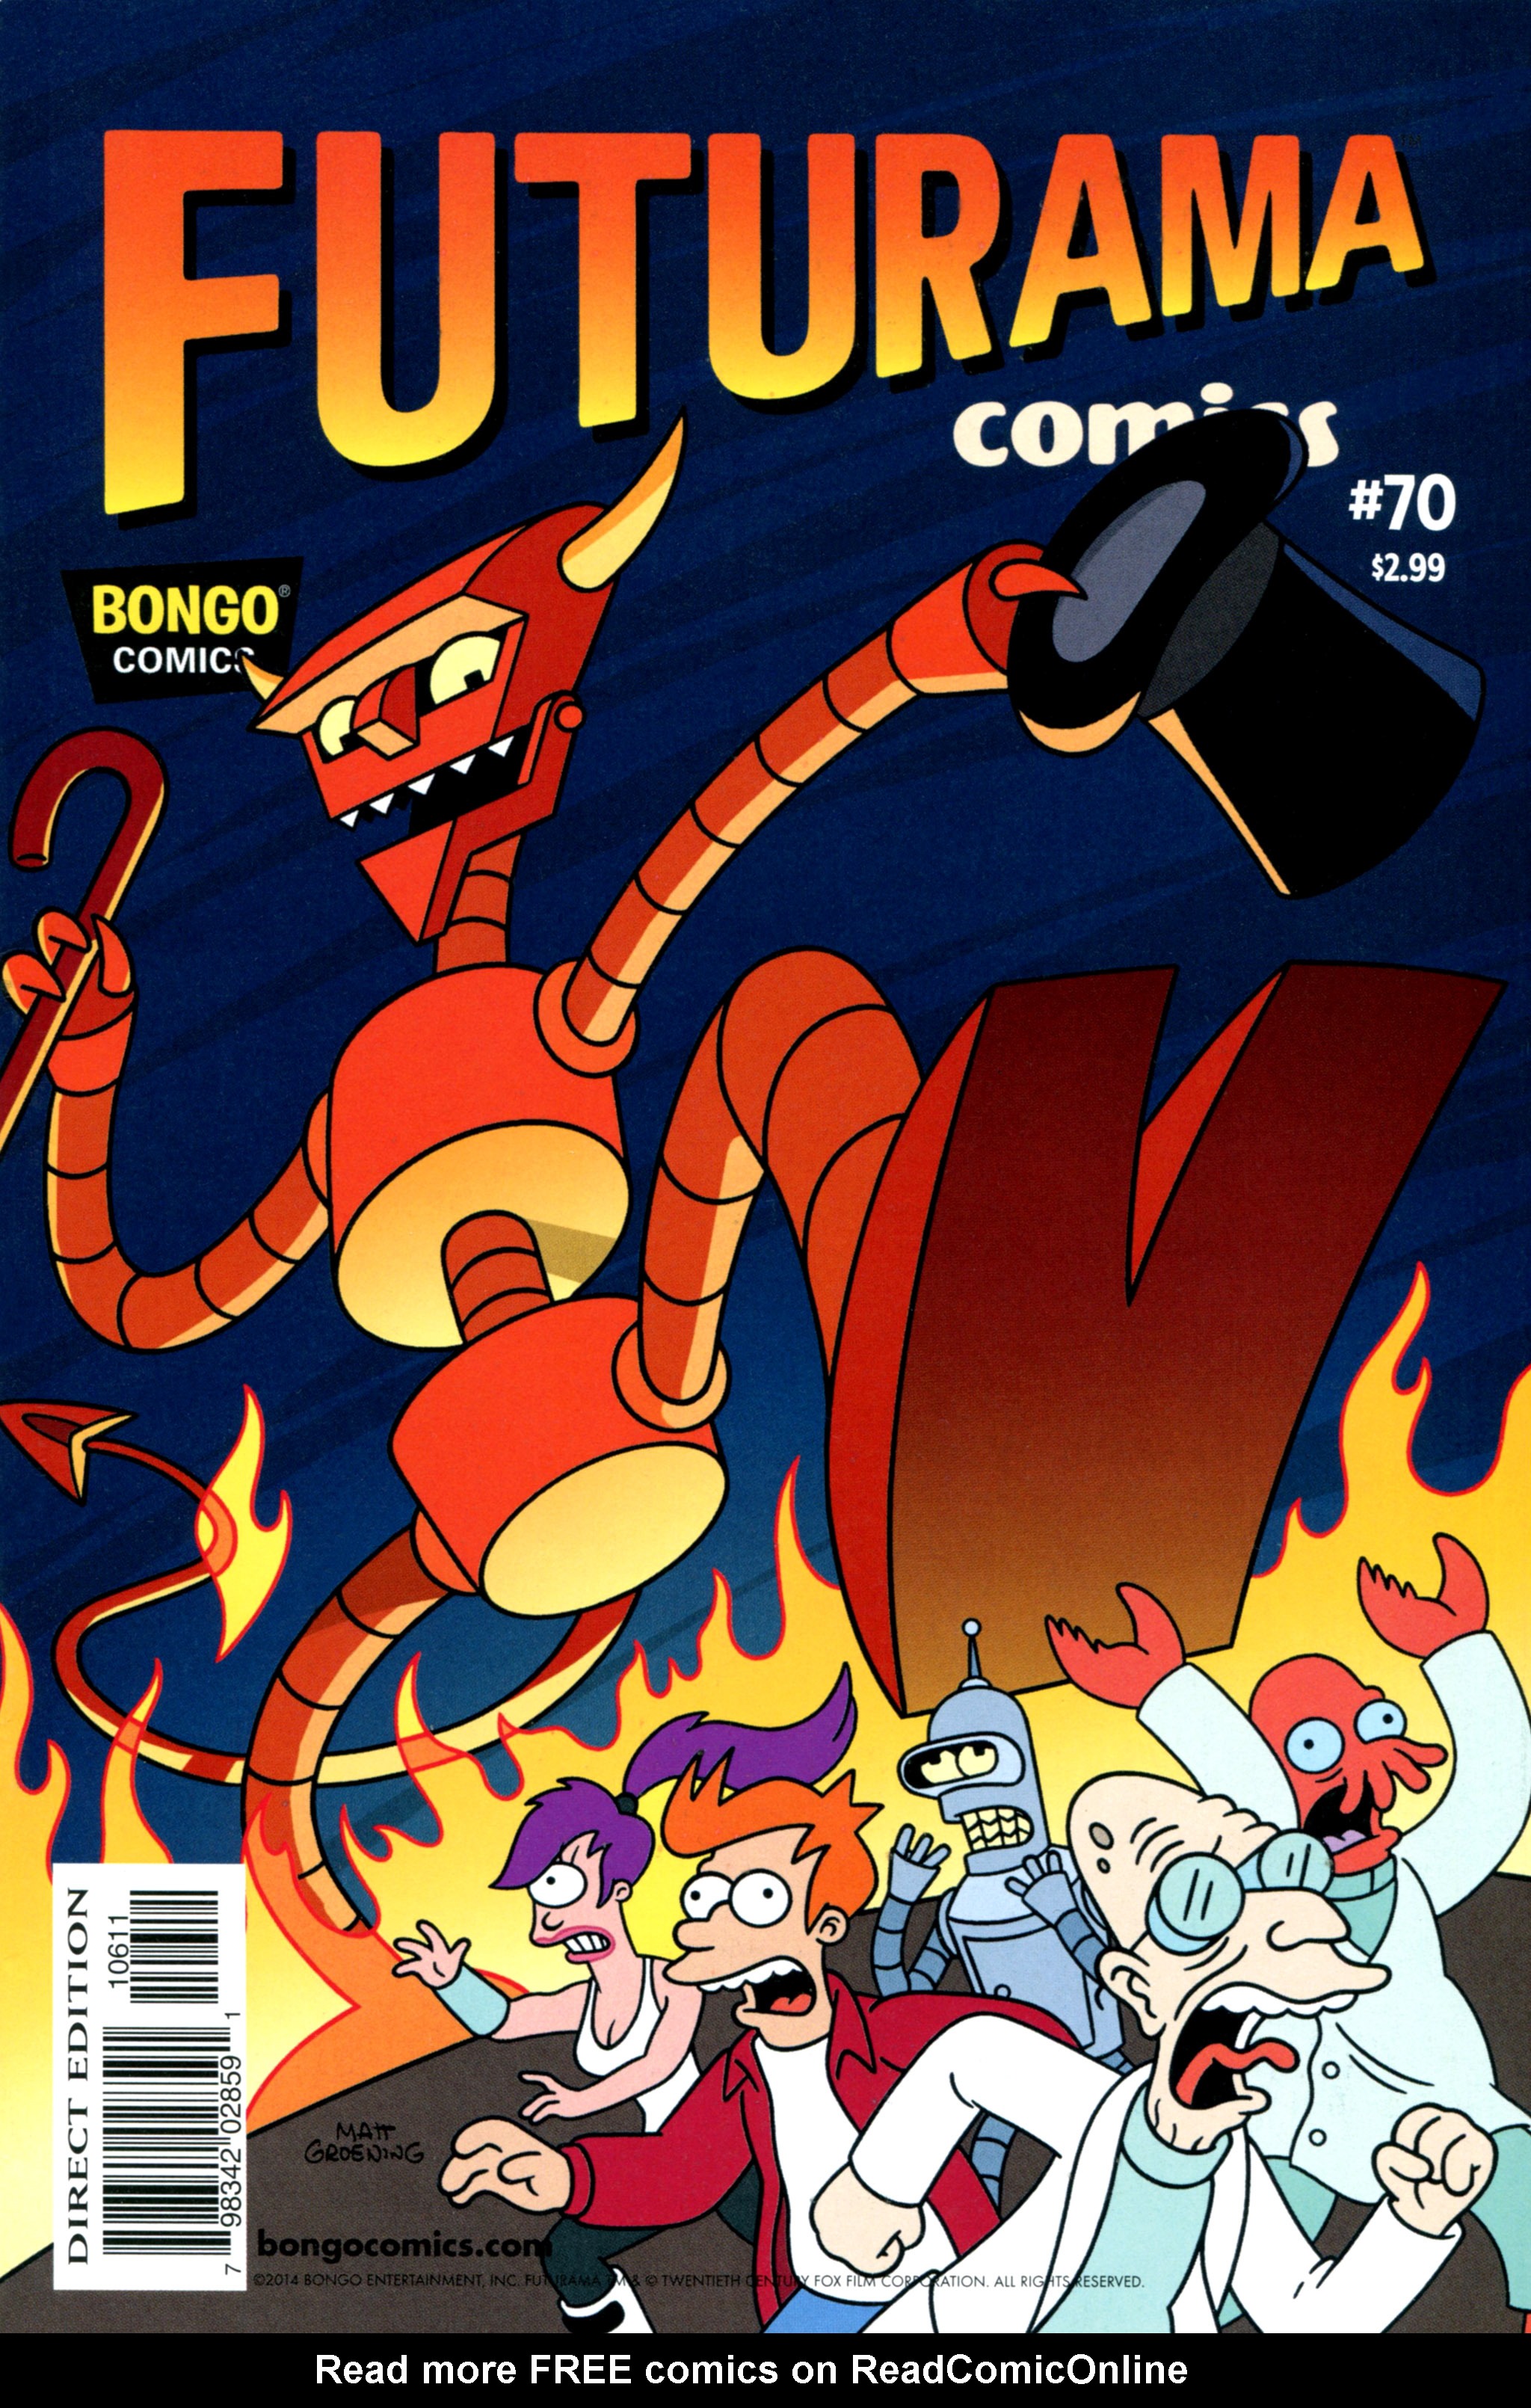 Futurama Comics Issue 70 | Read Futurama Comics Issue 70 comic online in  high quality. Read Full Comic online for free - Read comics online in high  quality .